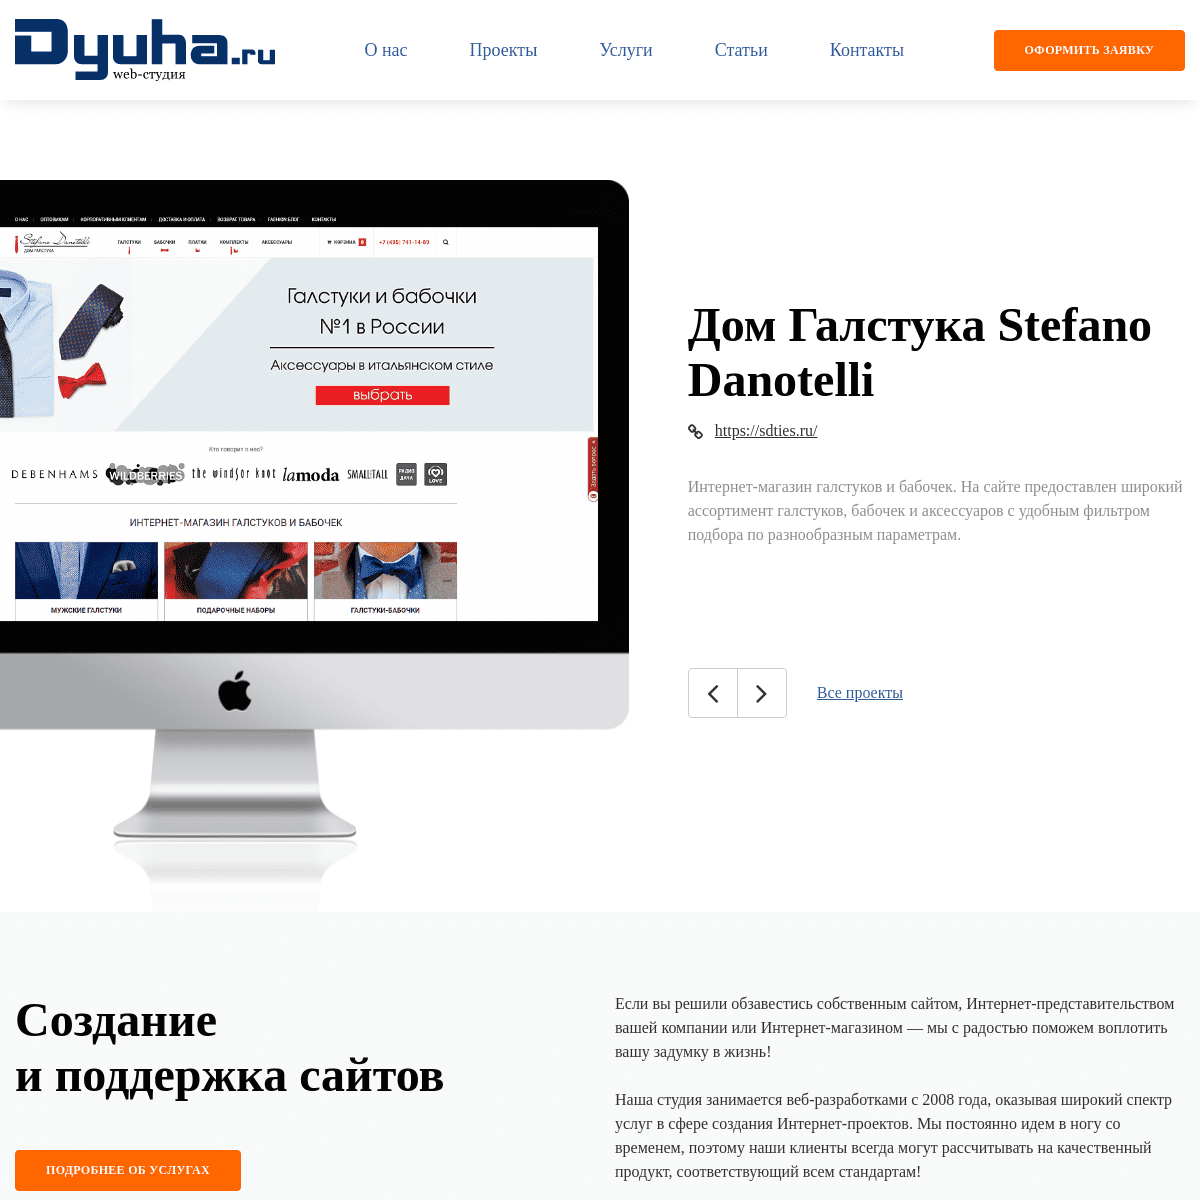 A complete backup of https://dyuha.ru